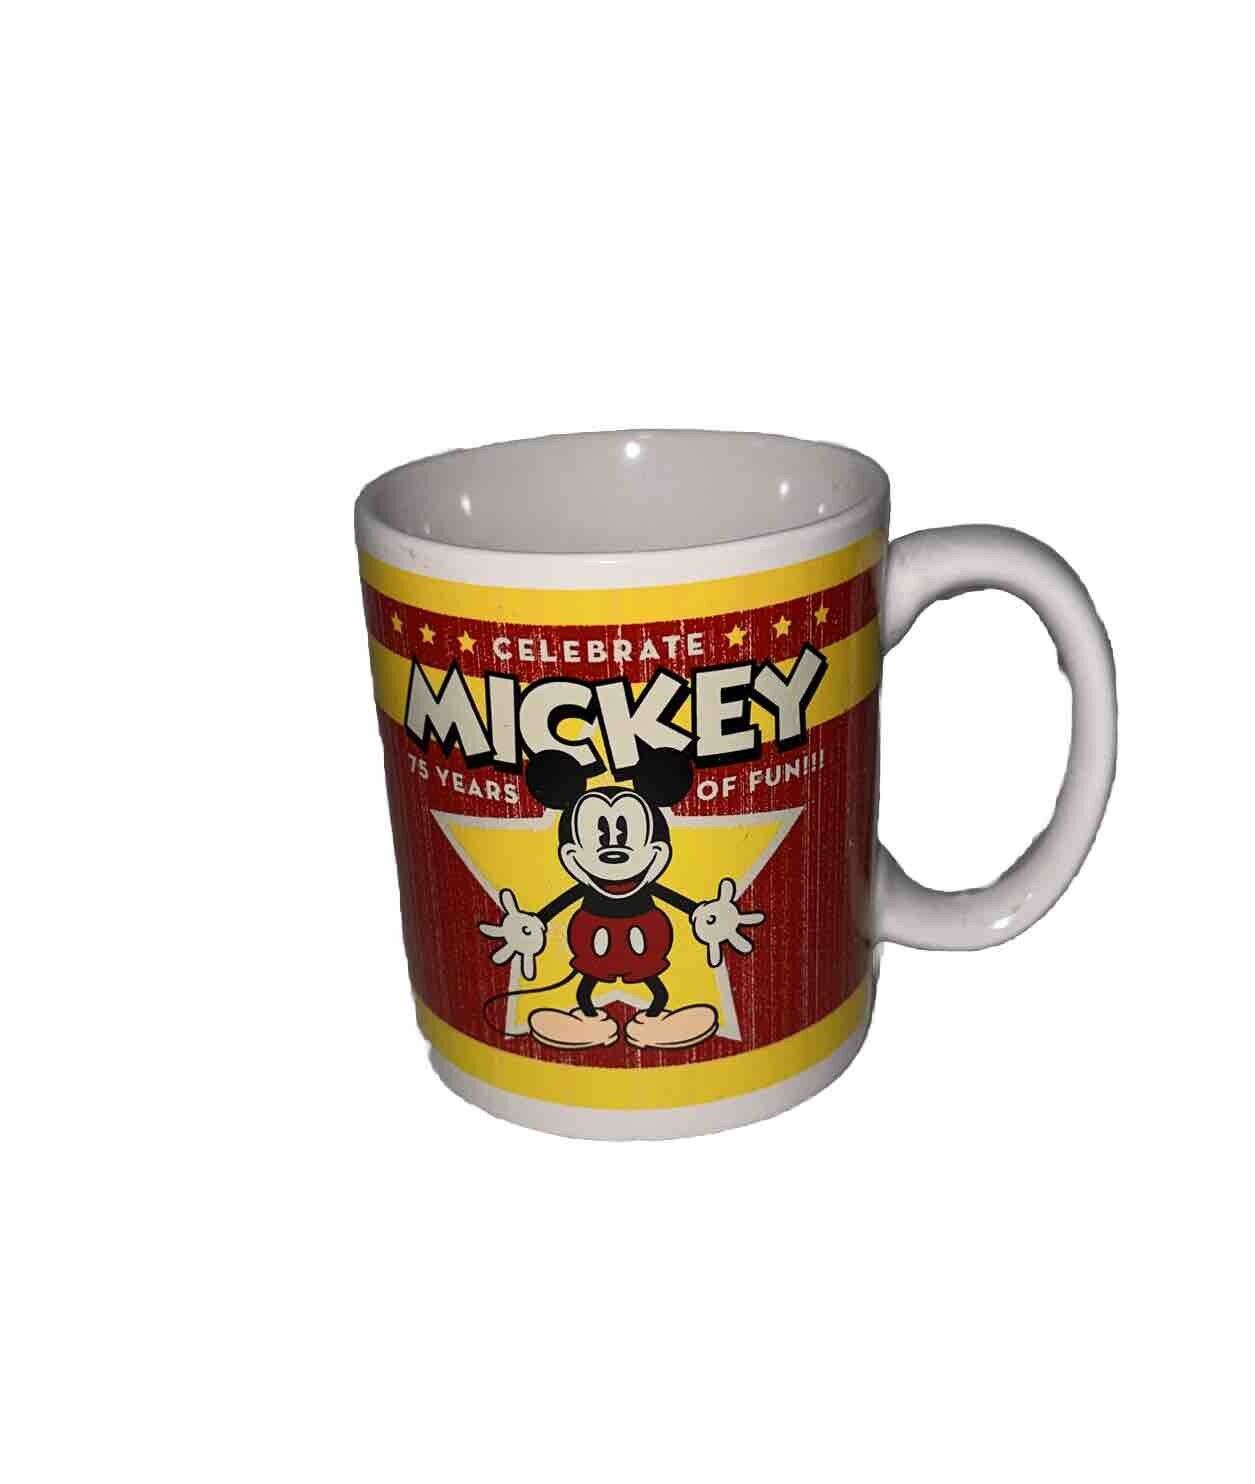 Vintage Disney Celebrate Mickey 75 Years of Fun Ceramic Coffee Tea Cup Mug